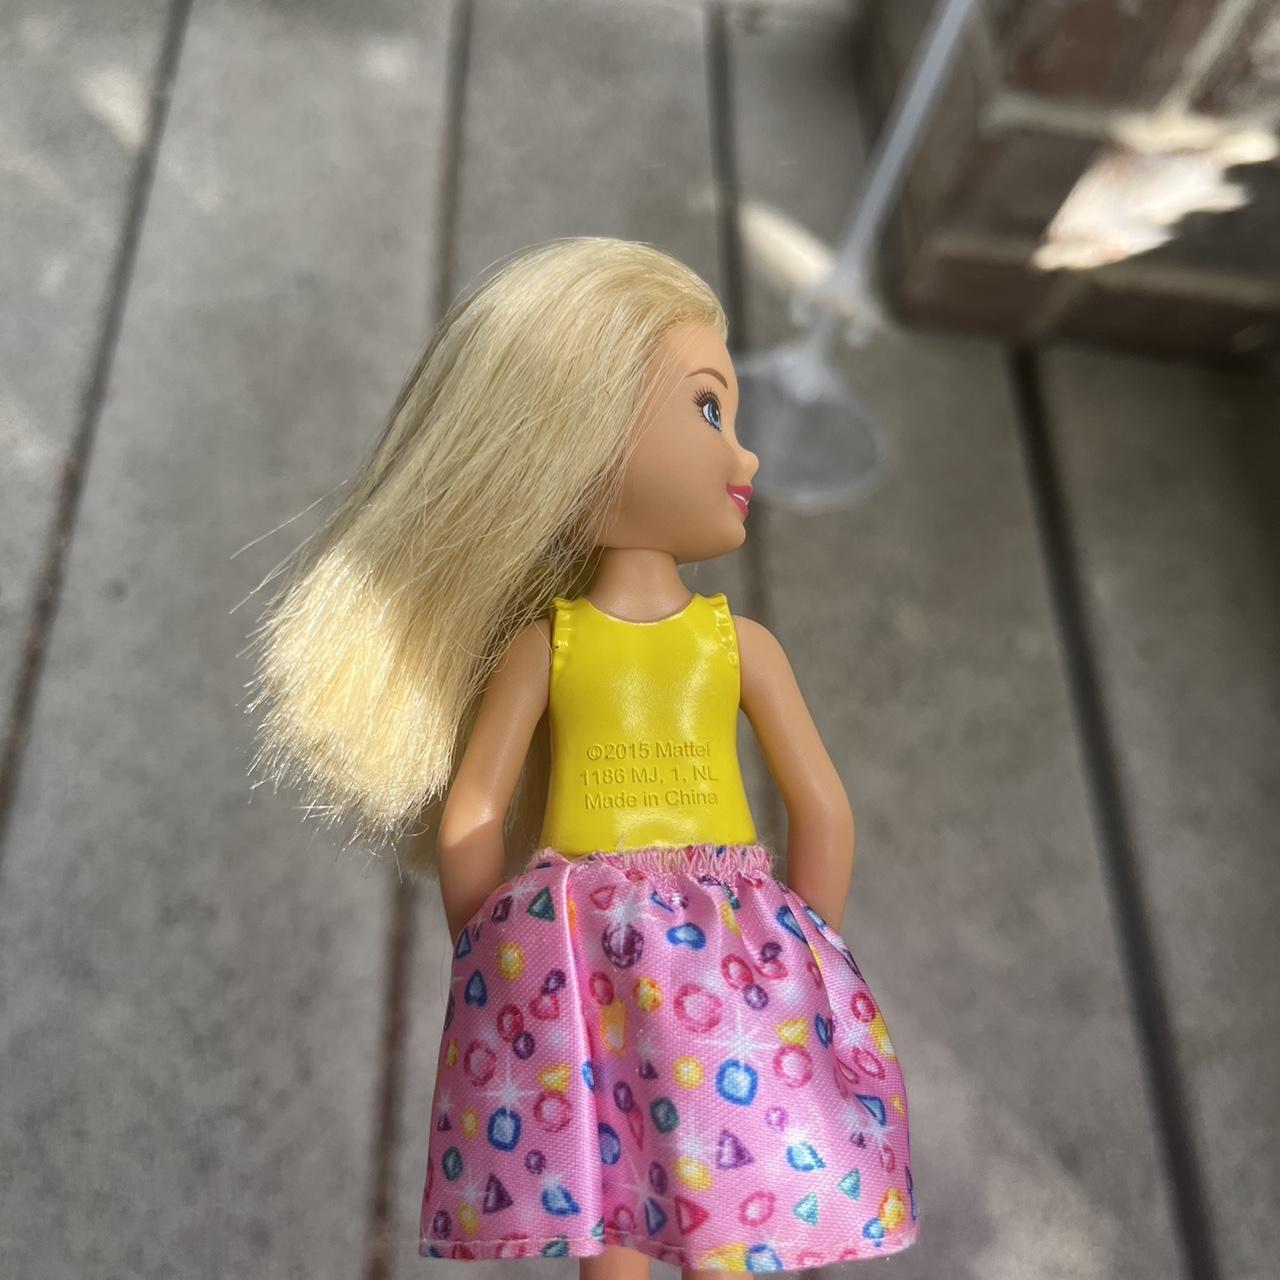 Lunch onderdak Vermoorden 2019 Barbie Club Chelsea Happy Camper - Chelsea... - Depop